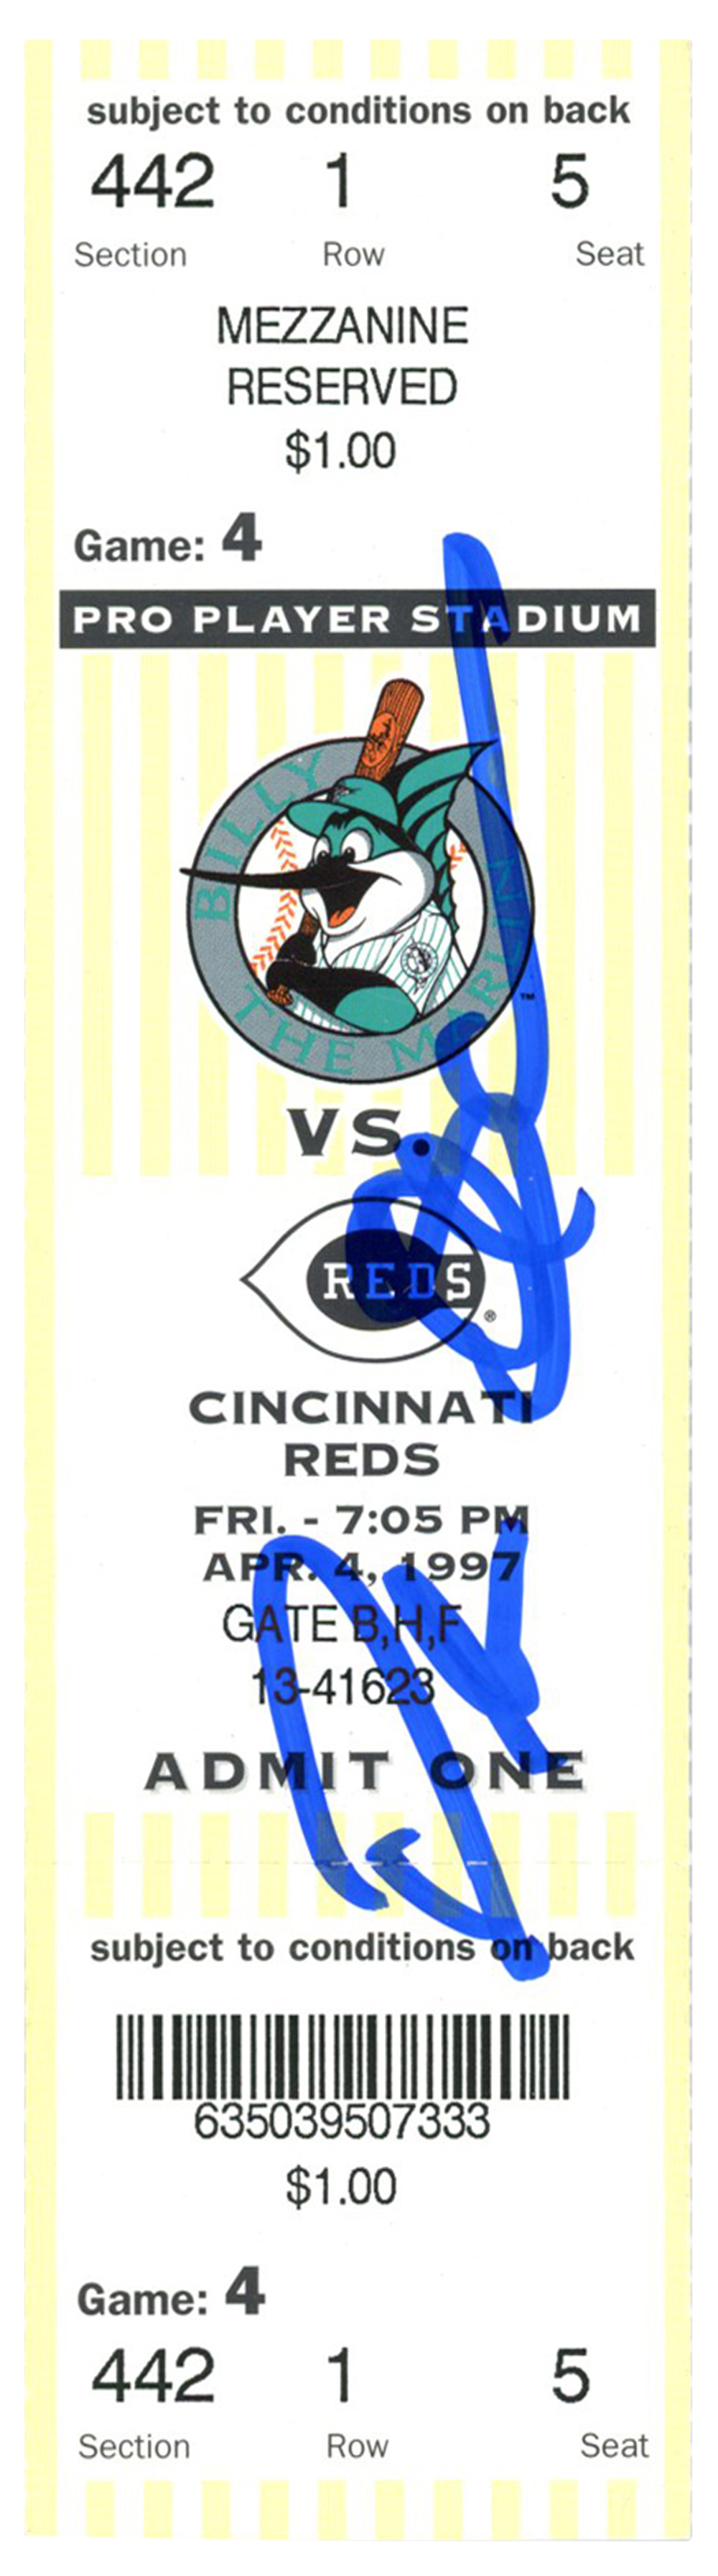 Deion Sanders Signed Cincinnati Reds 4/4/1997 @ Marlins Ticket BAS